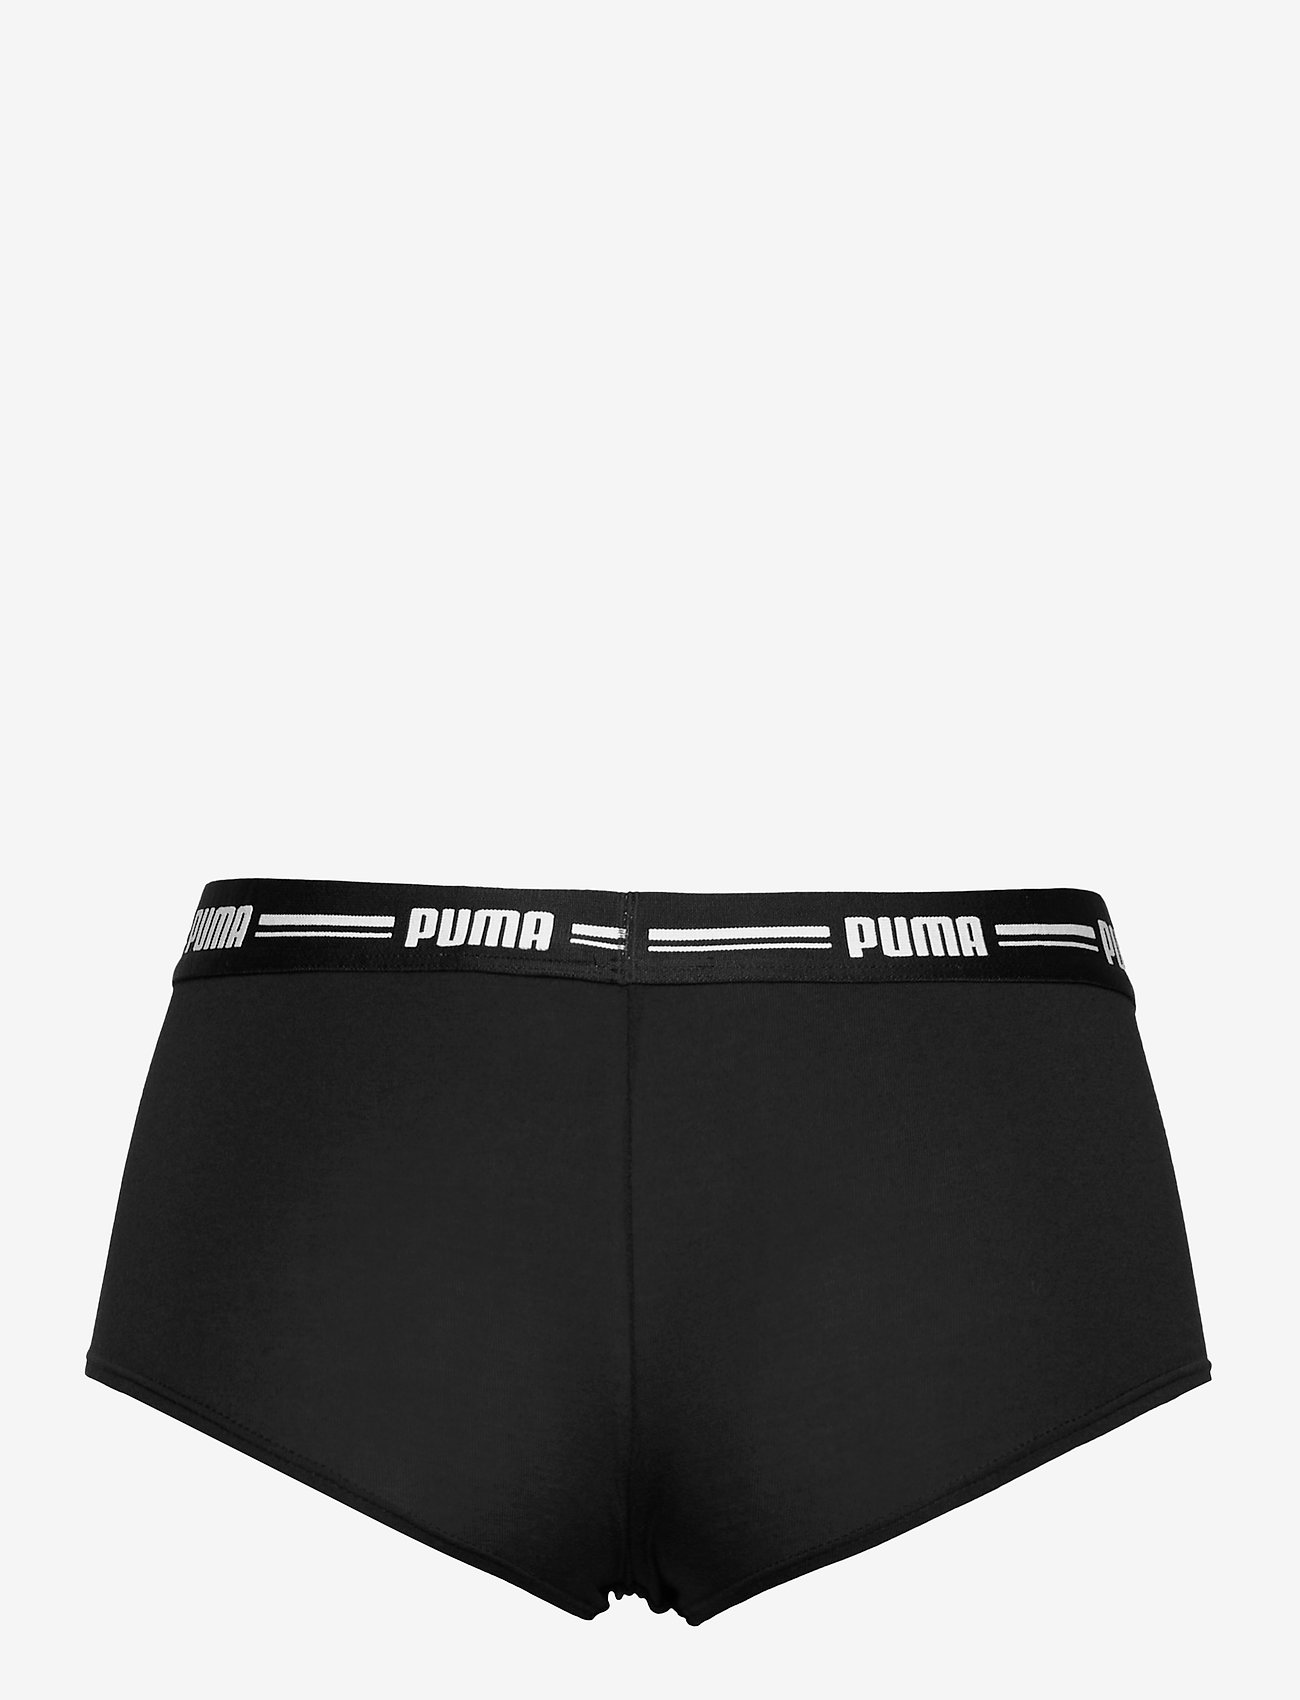 puma women's shorts